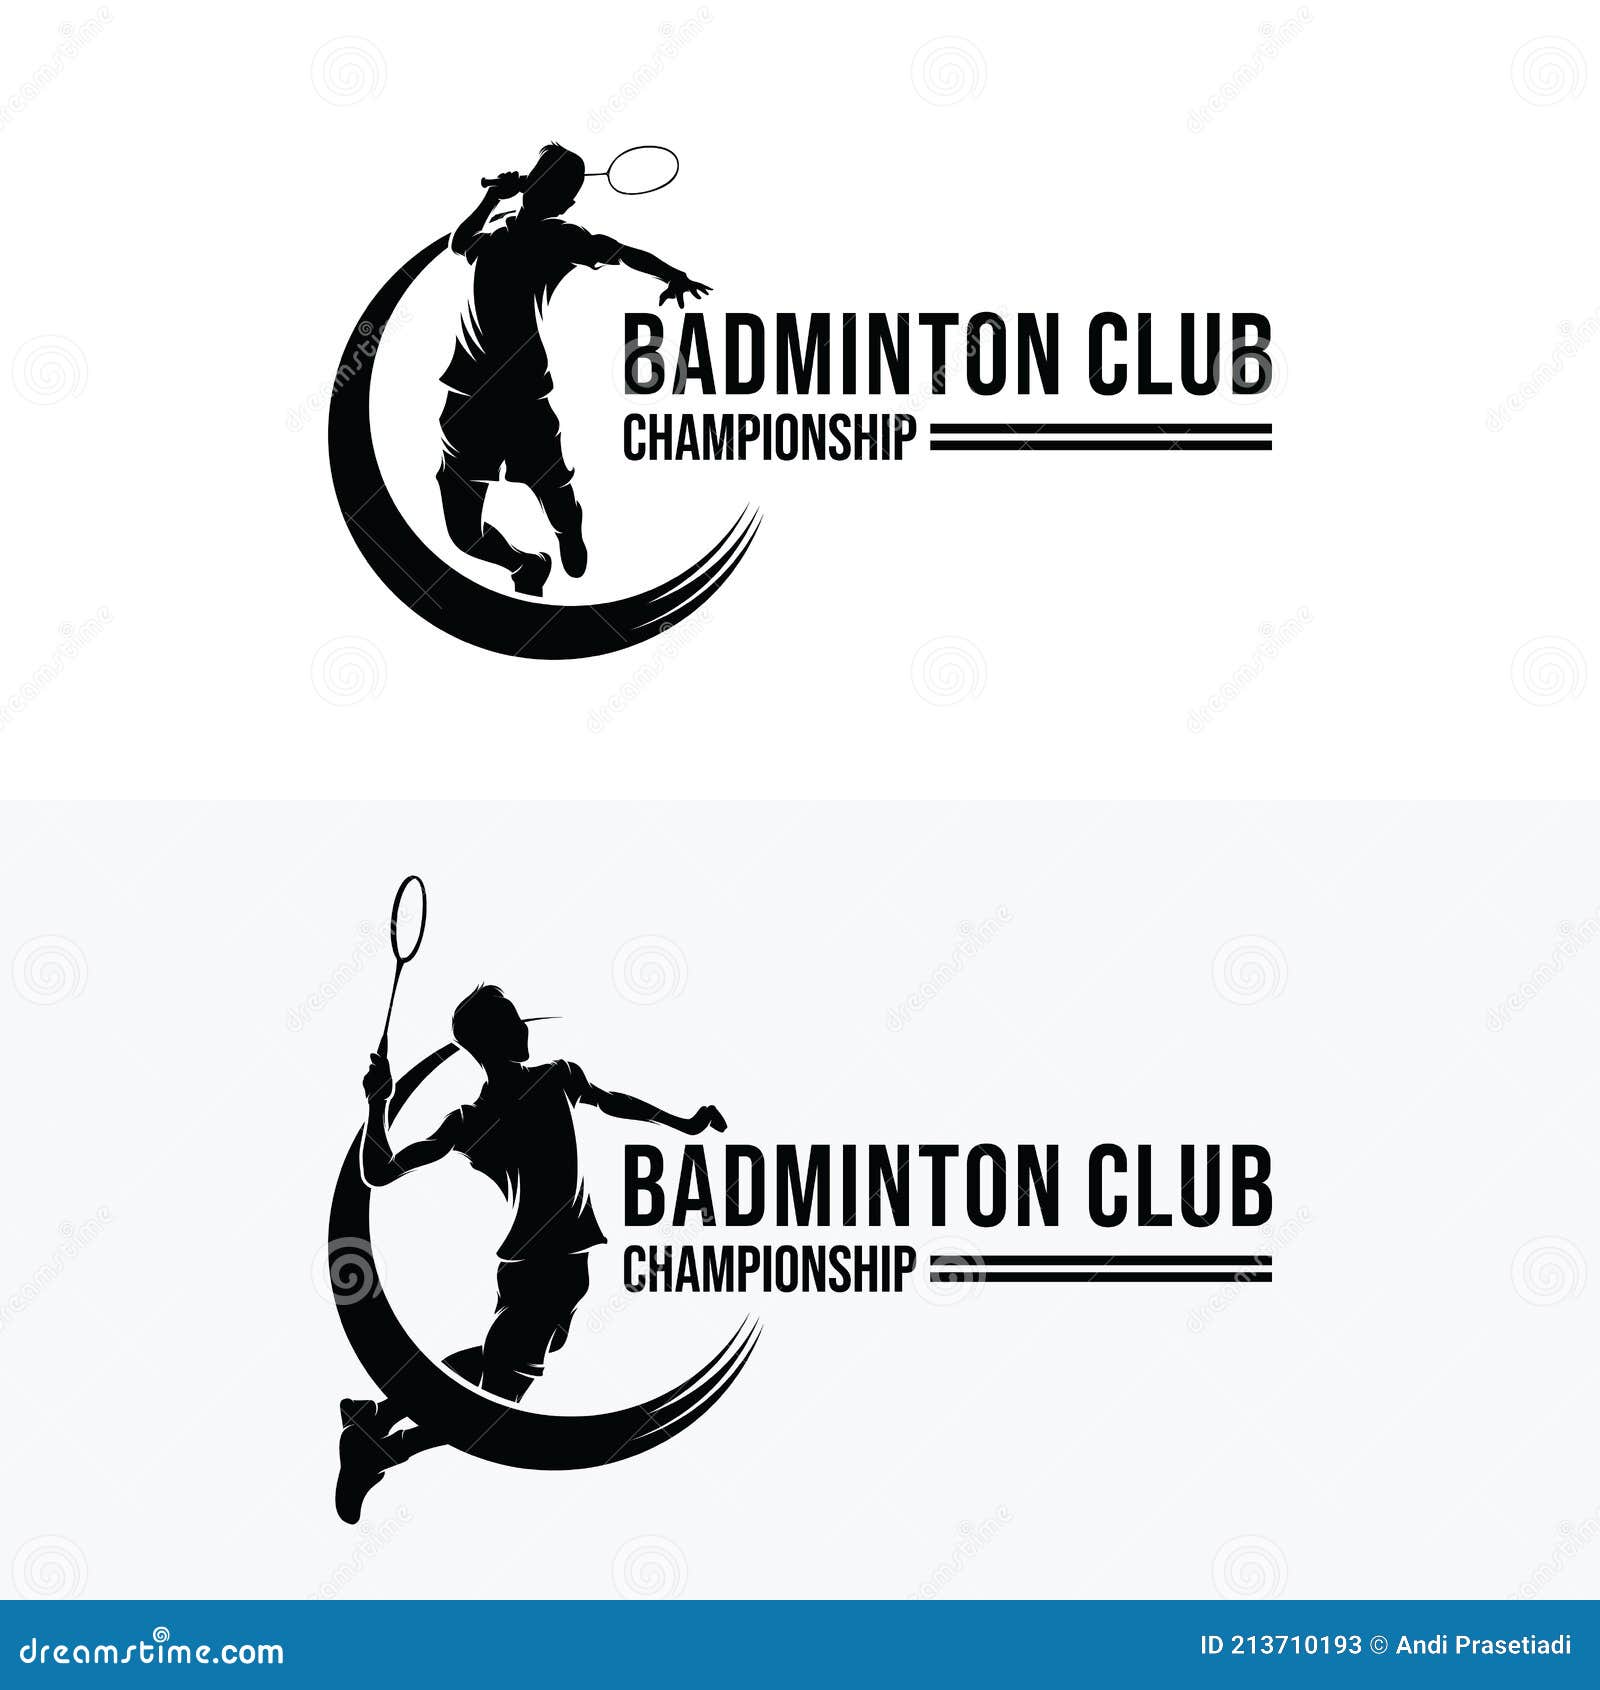 Badminton Logo Stock Illustrations, Royalty-Free Vector Graphics & Clip Art  - iStock